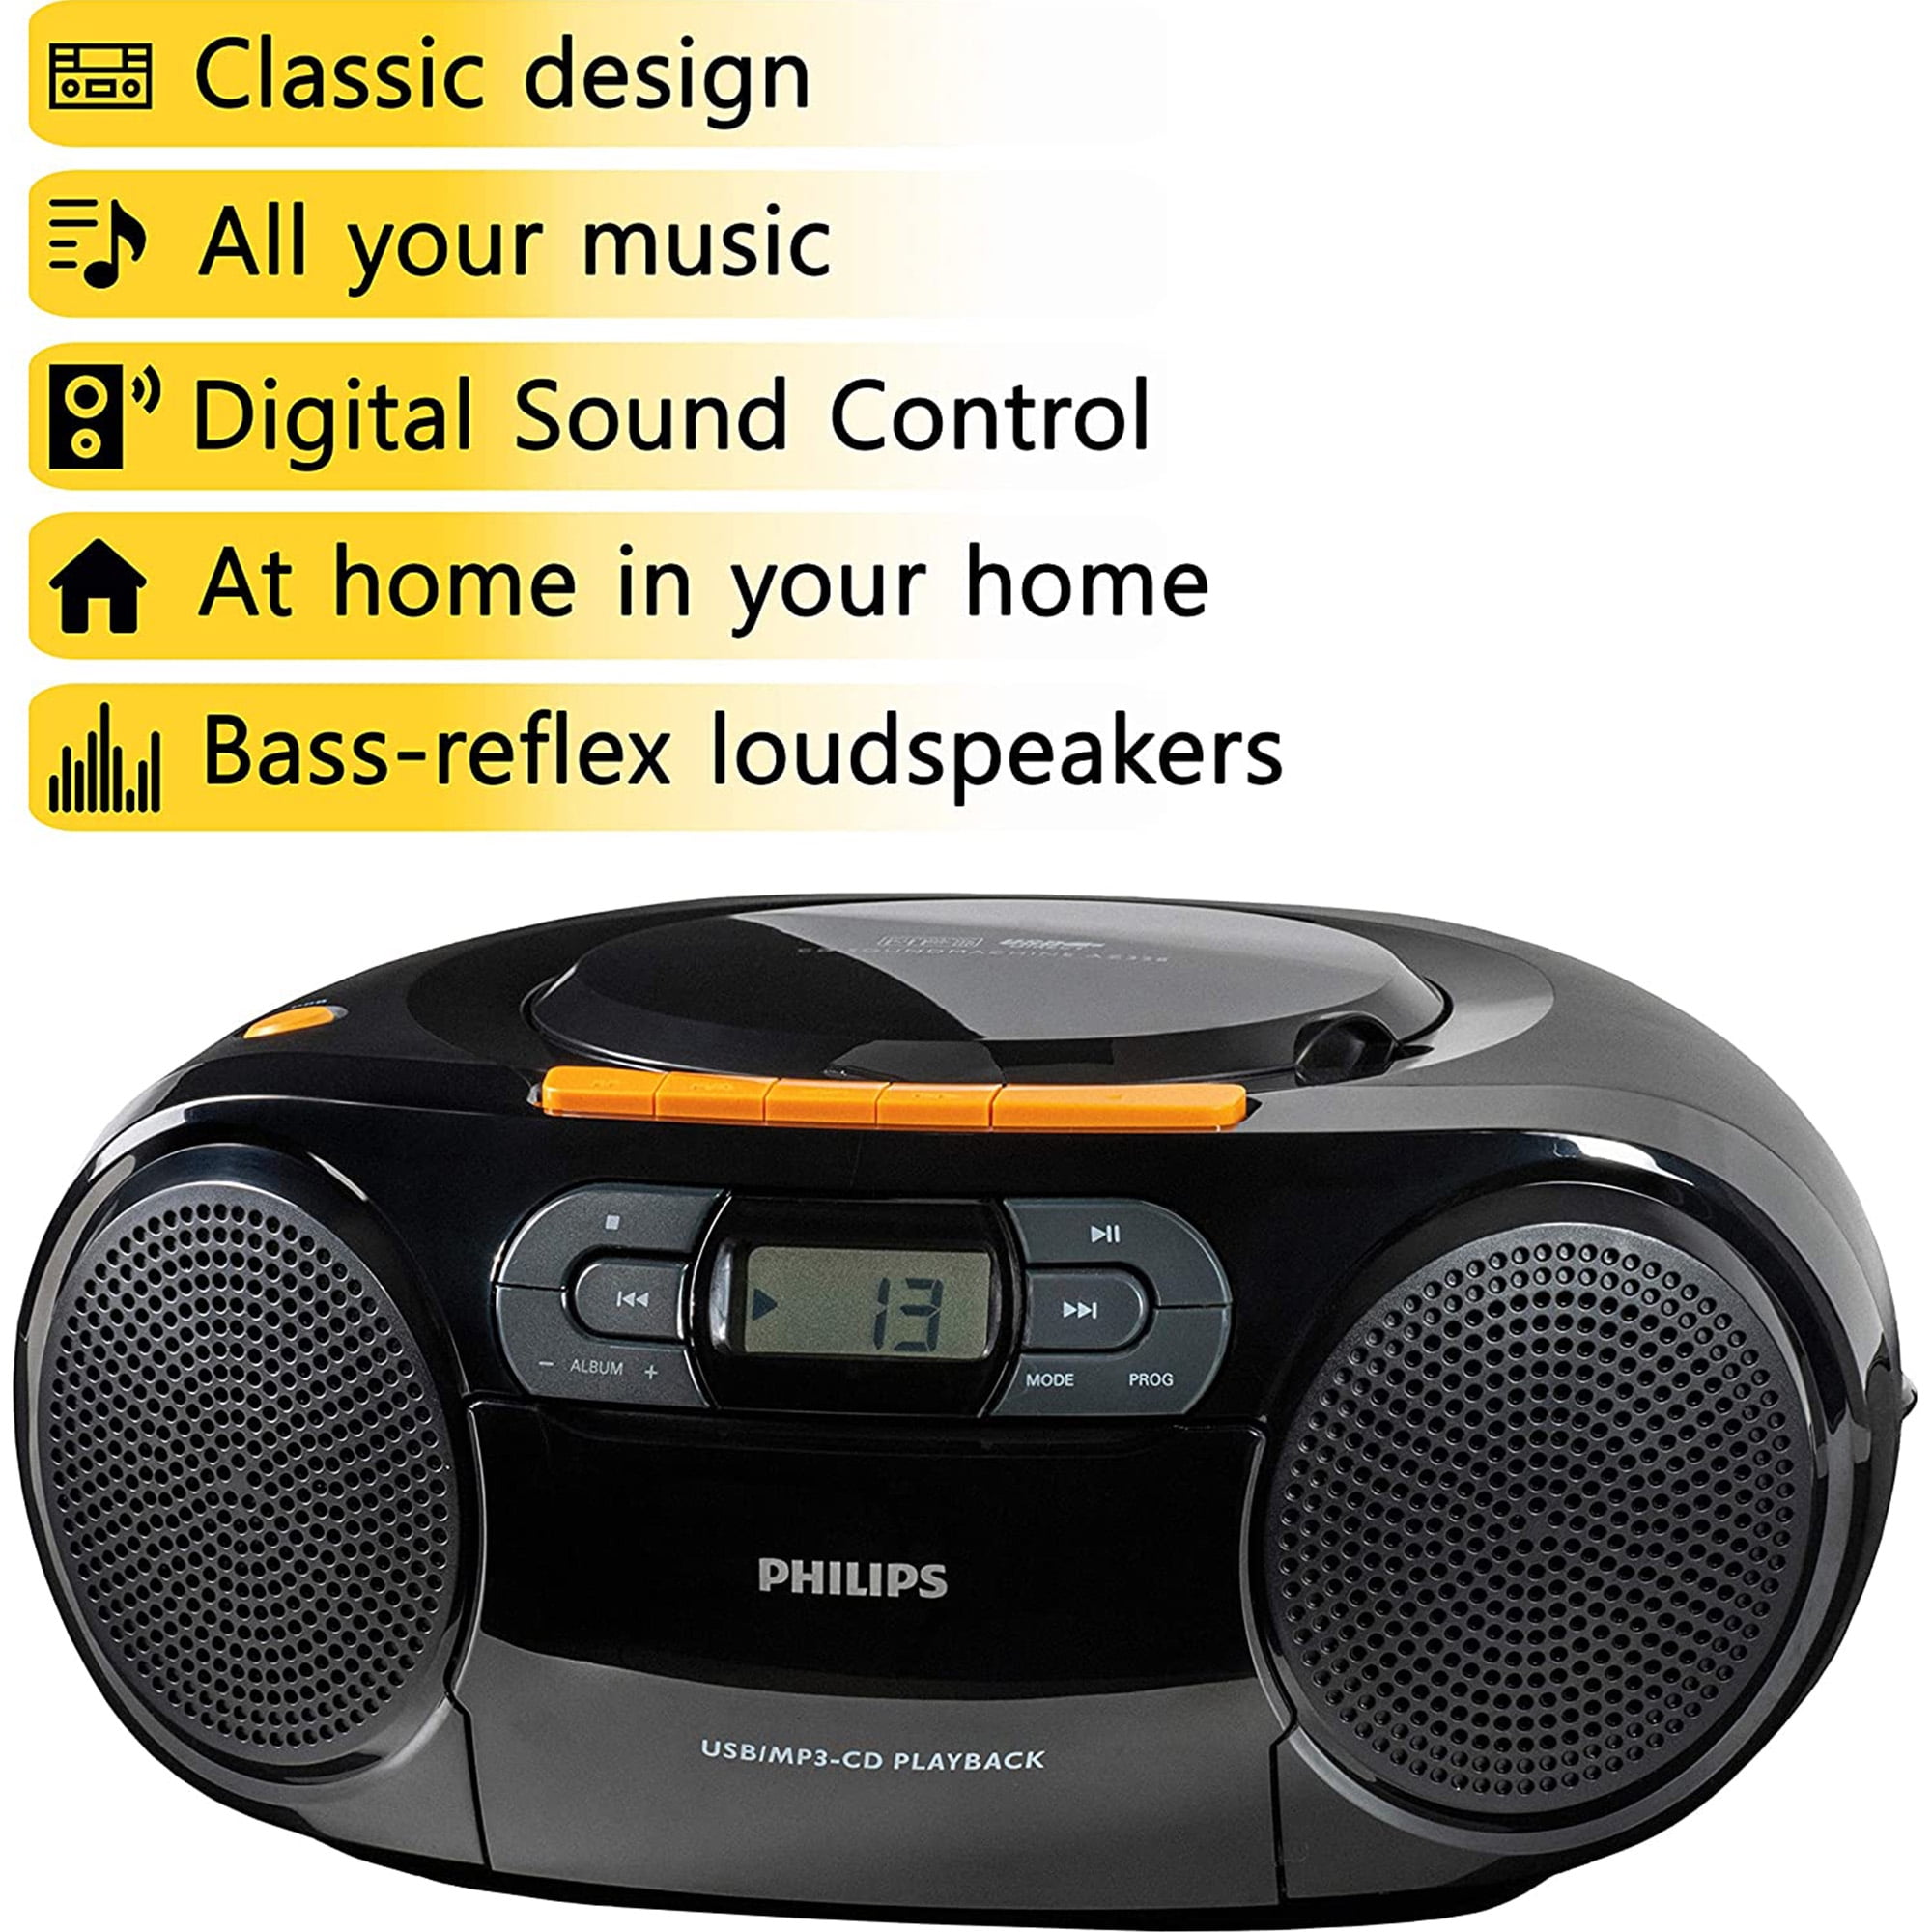 auna Art22 lecteur CD MP3 Boombox radio DAB+/FM lecteur CD/MP3 3 W